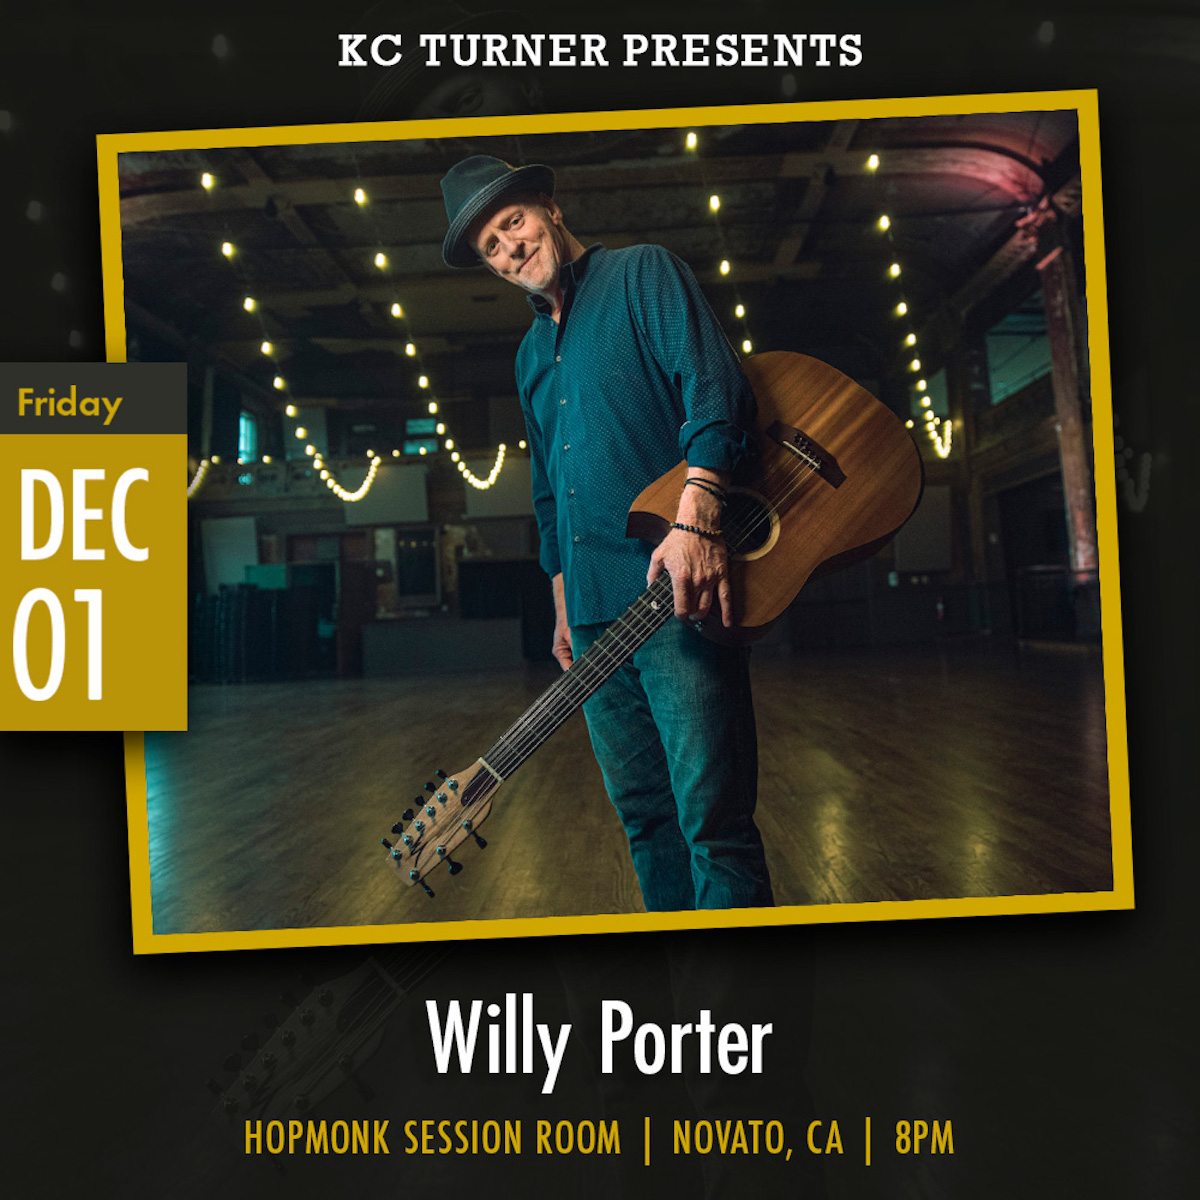 Willy Porter, Live Music December, Marin